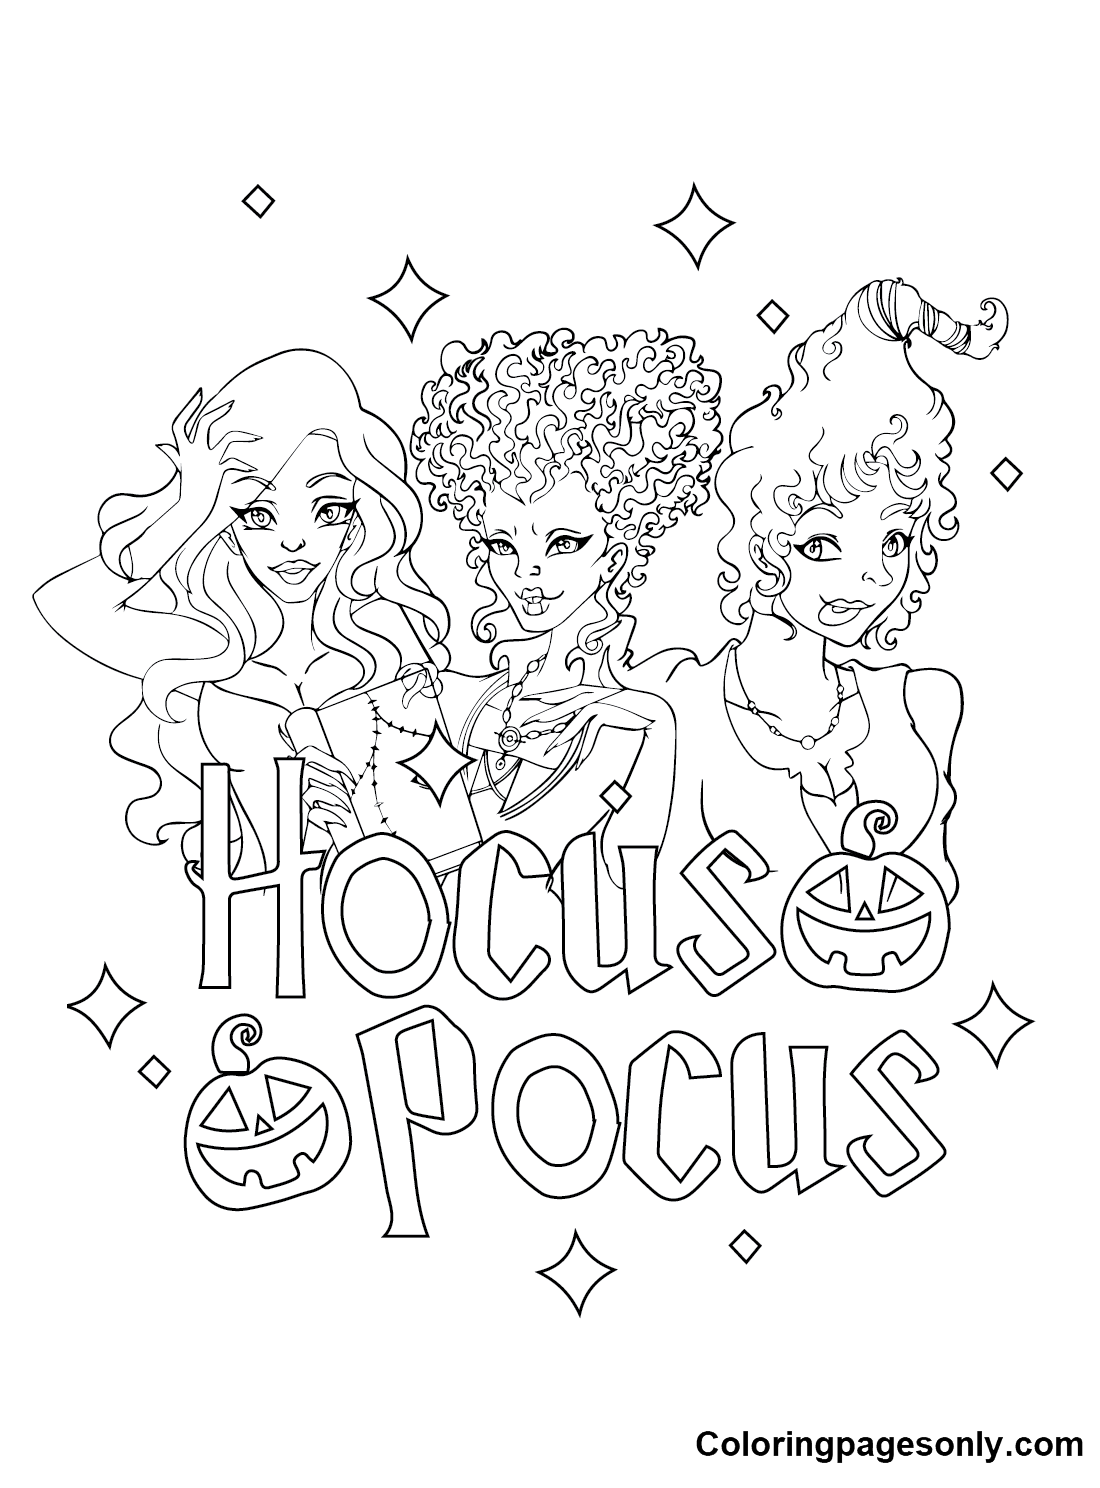 Hocus Pocus Images Coloring Page